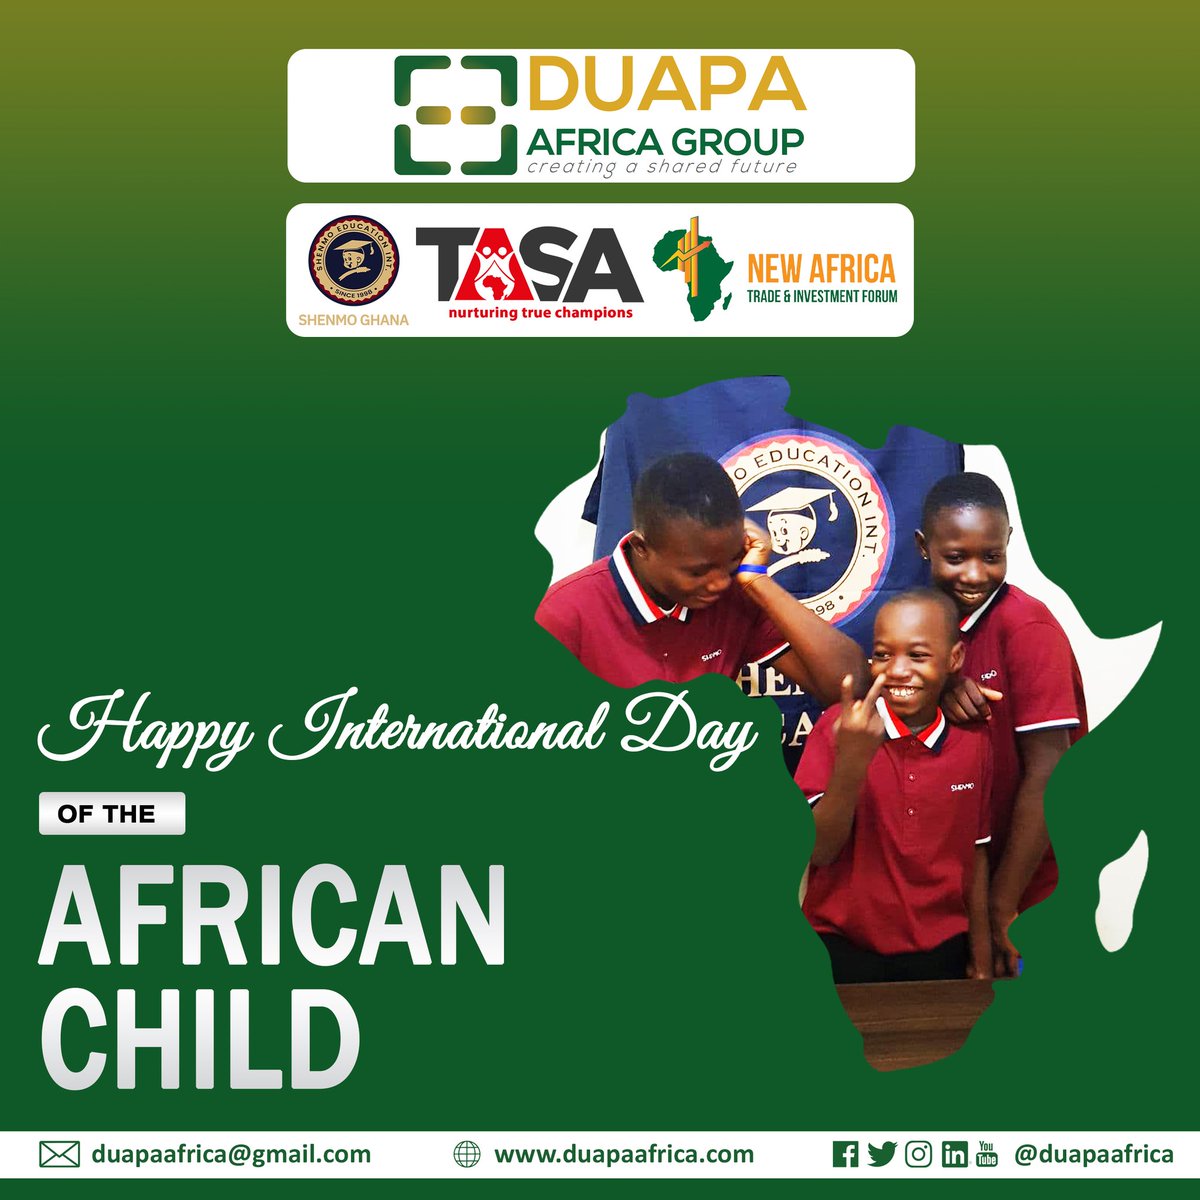 To all the Children of Africa, #HappyInternationalDayoftheAfricanChild #DAC2021 #ShenmoGhana #TASA #NATIF #DuapaAfrica